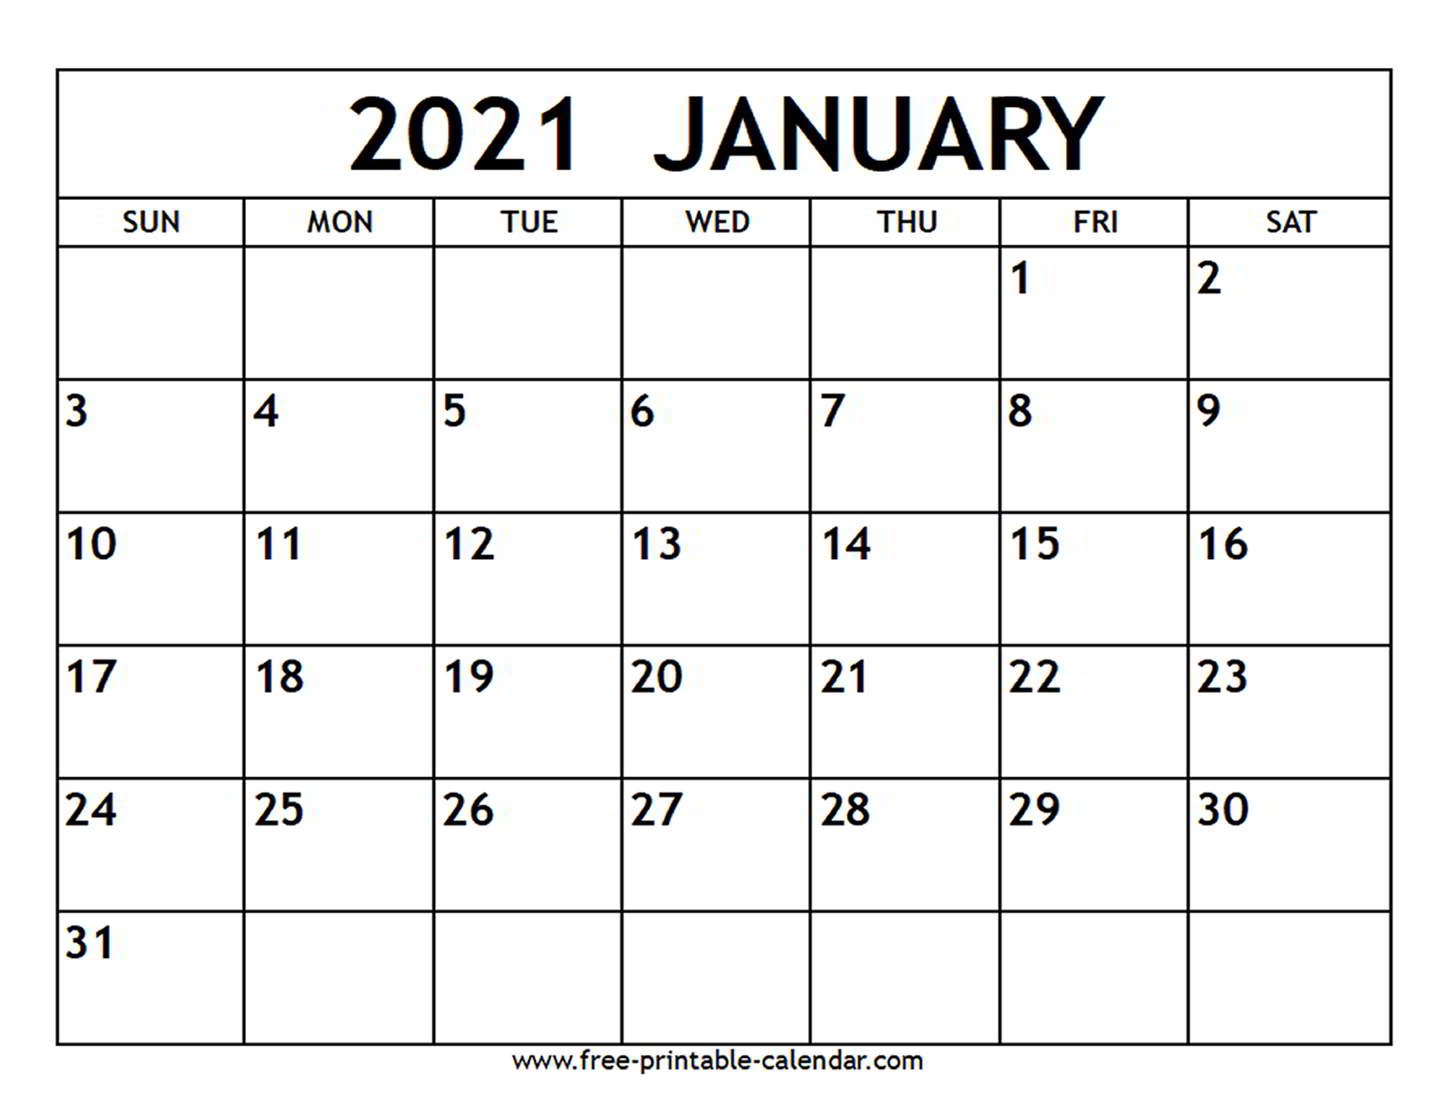 January 2021 Calendar - Free-Printable-Calendar